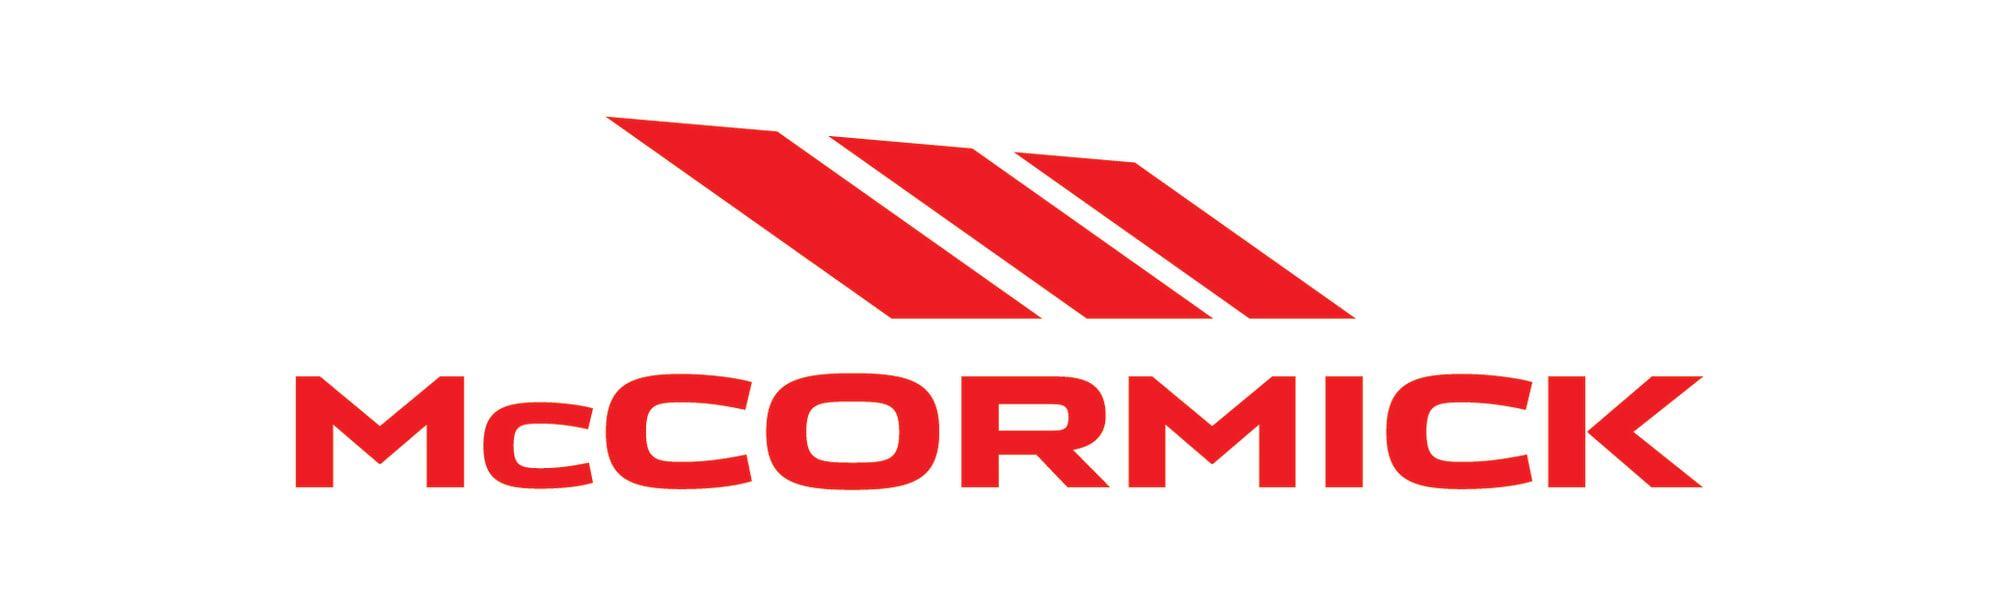 McCormick Logo - NEW LOGO DESIGN FOR McCORMICK